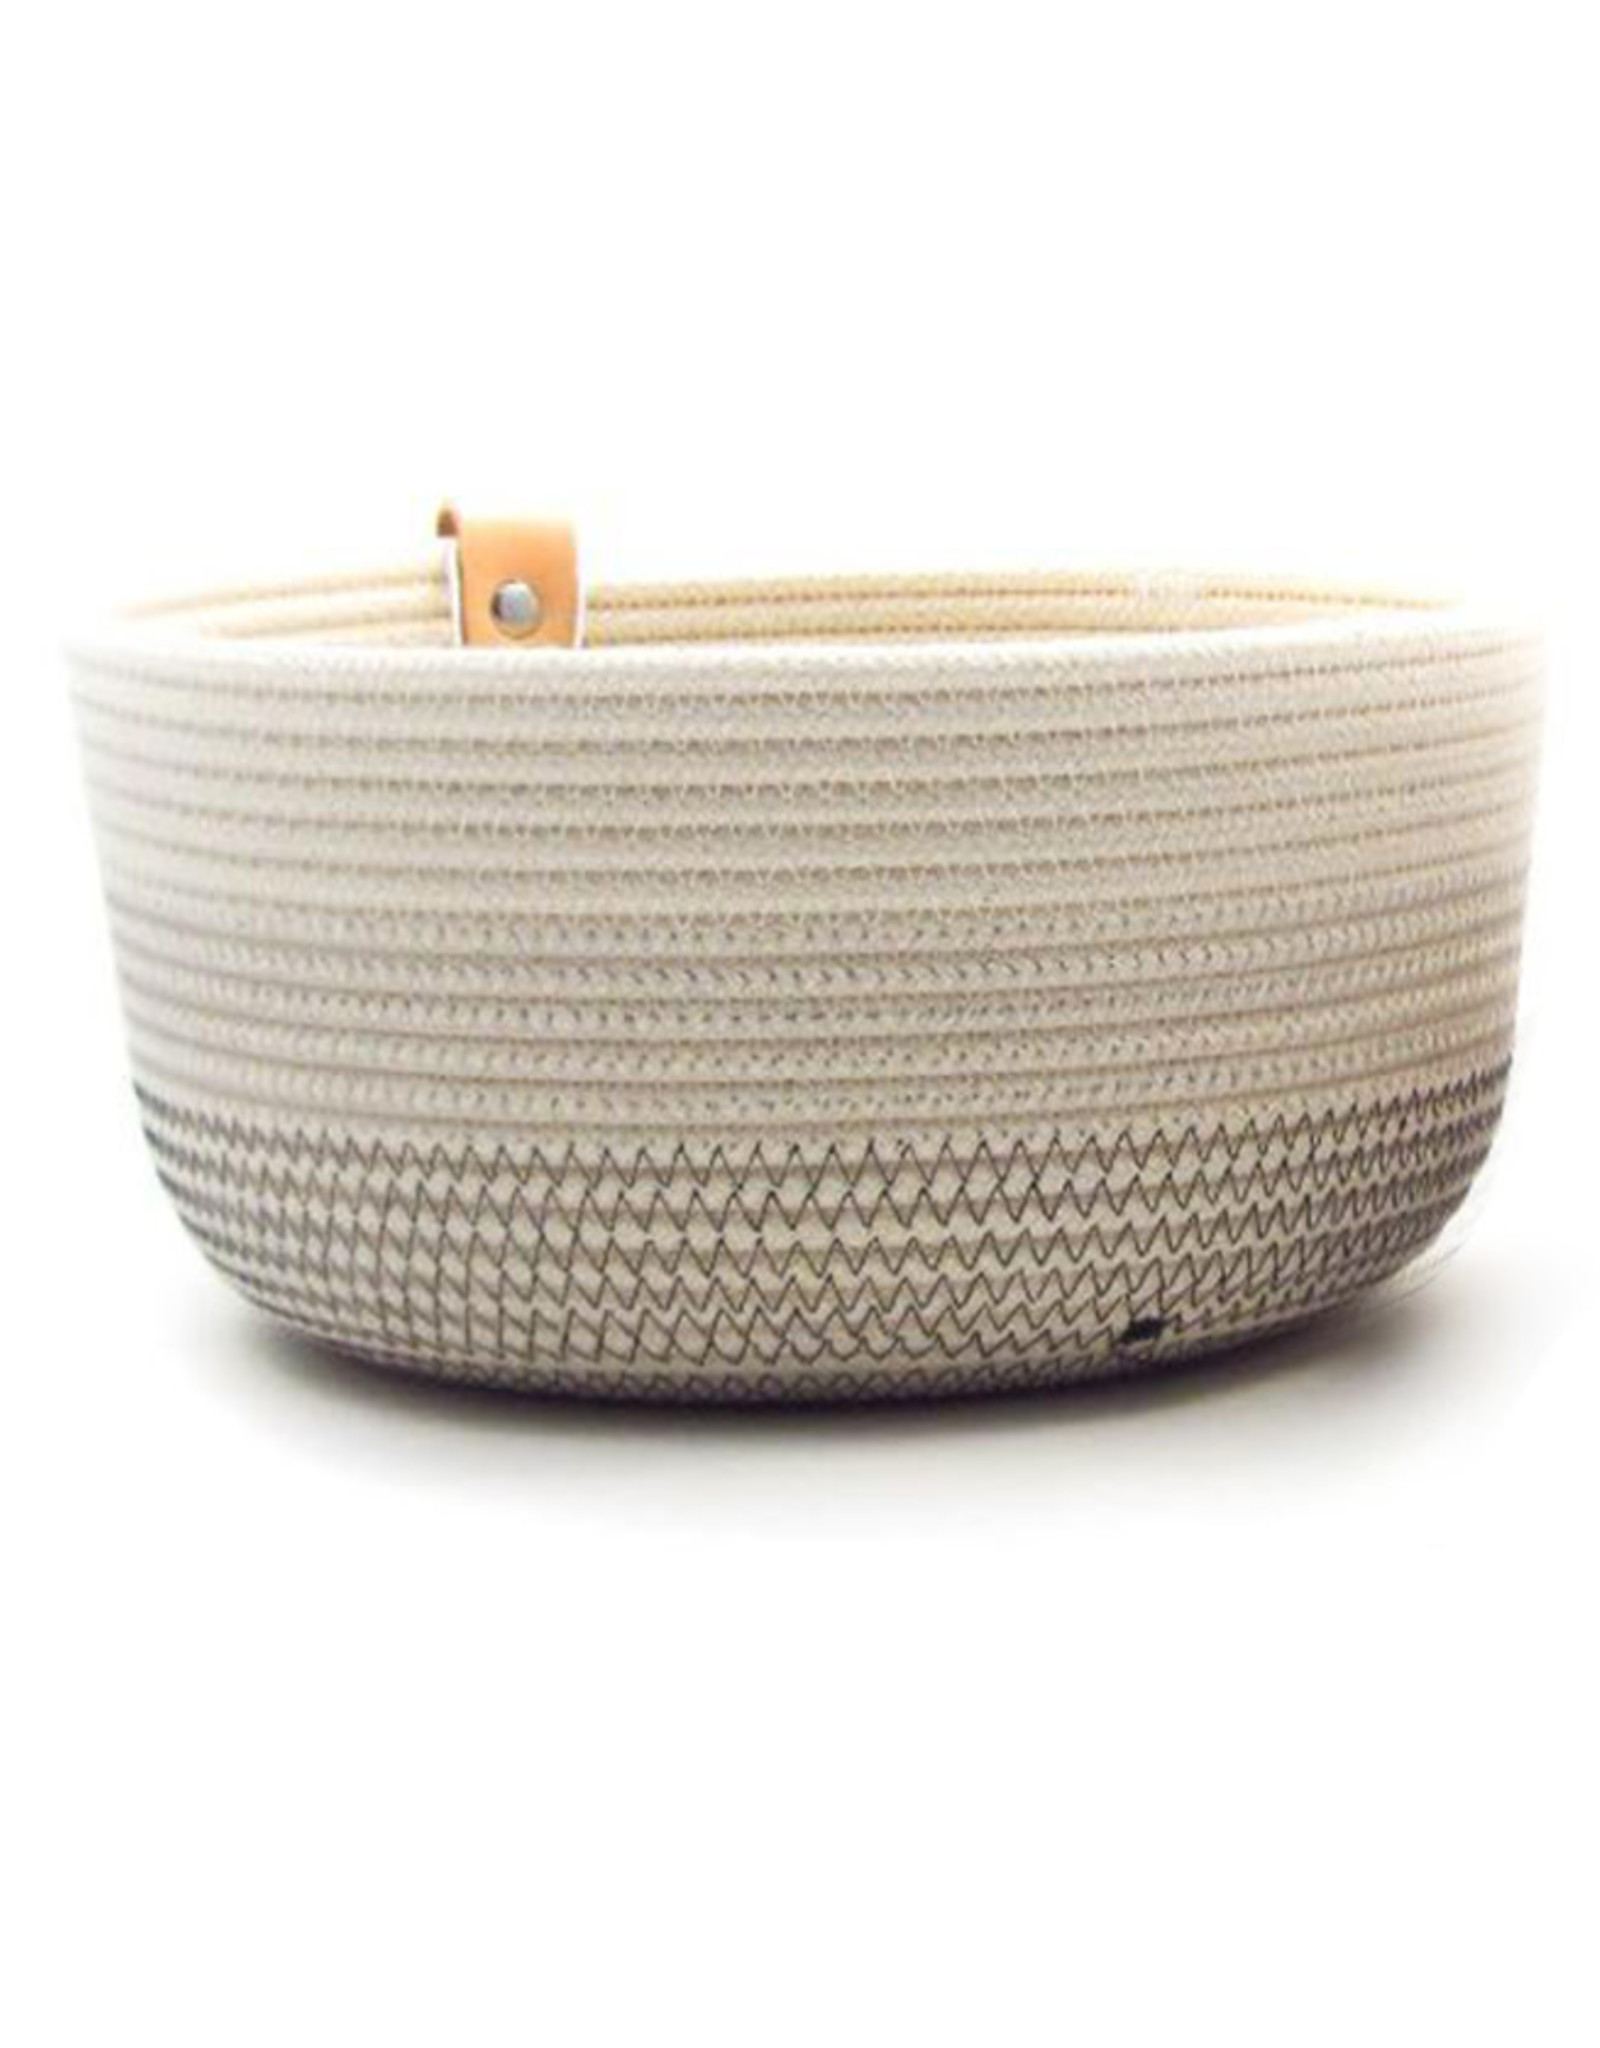 Koba Handmade Bowl Large High-shades of grey 25x12cm